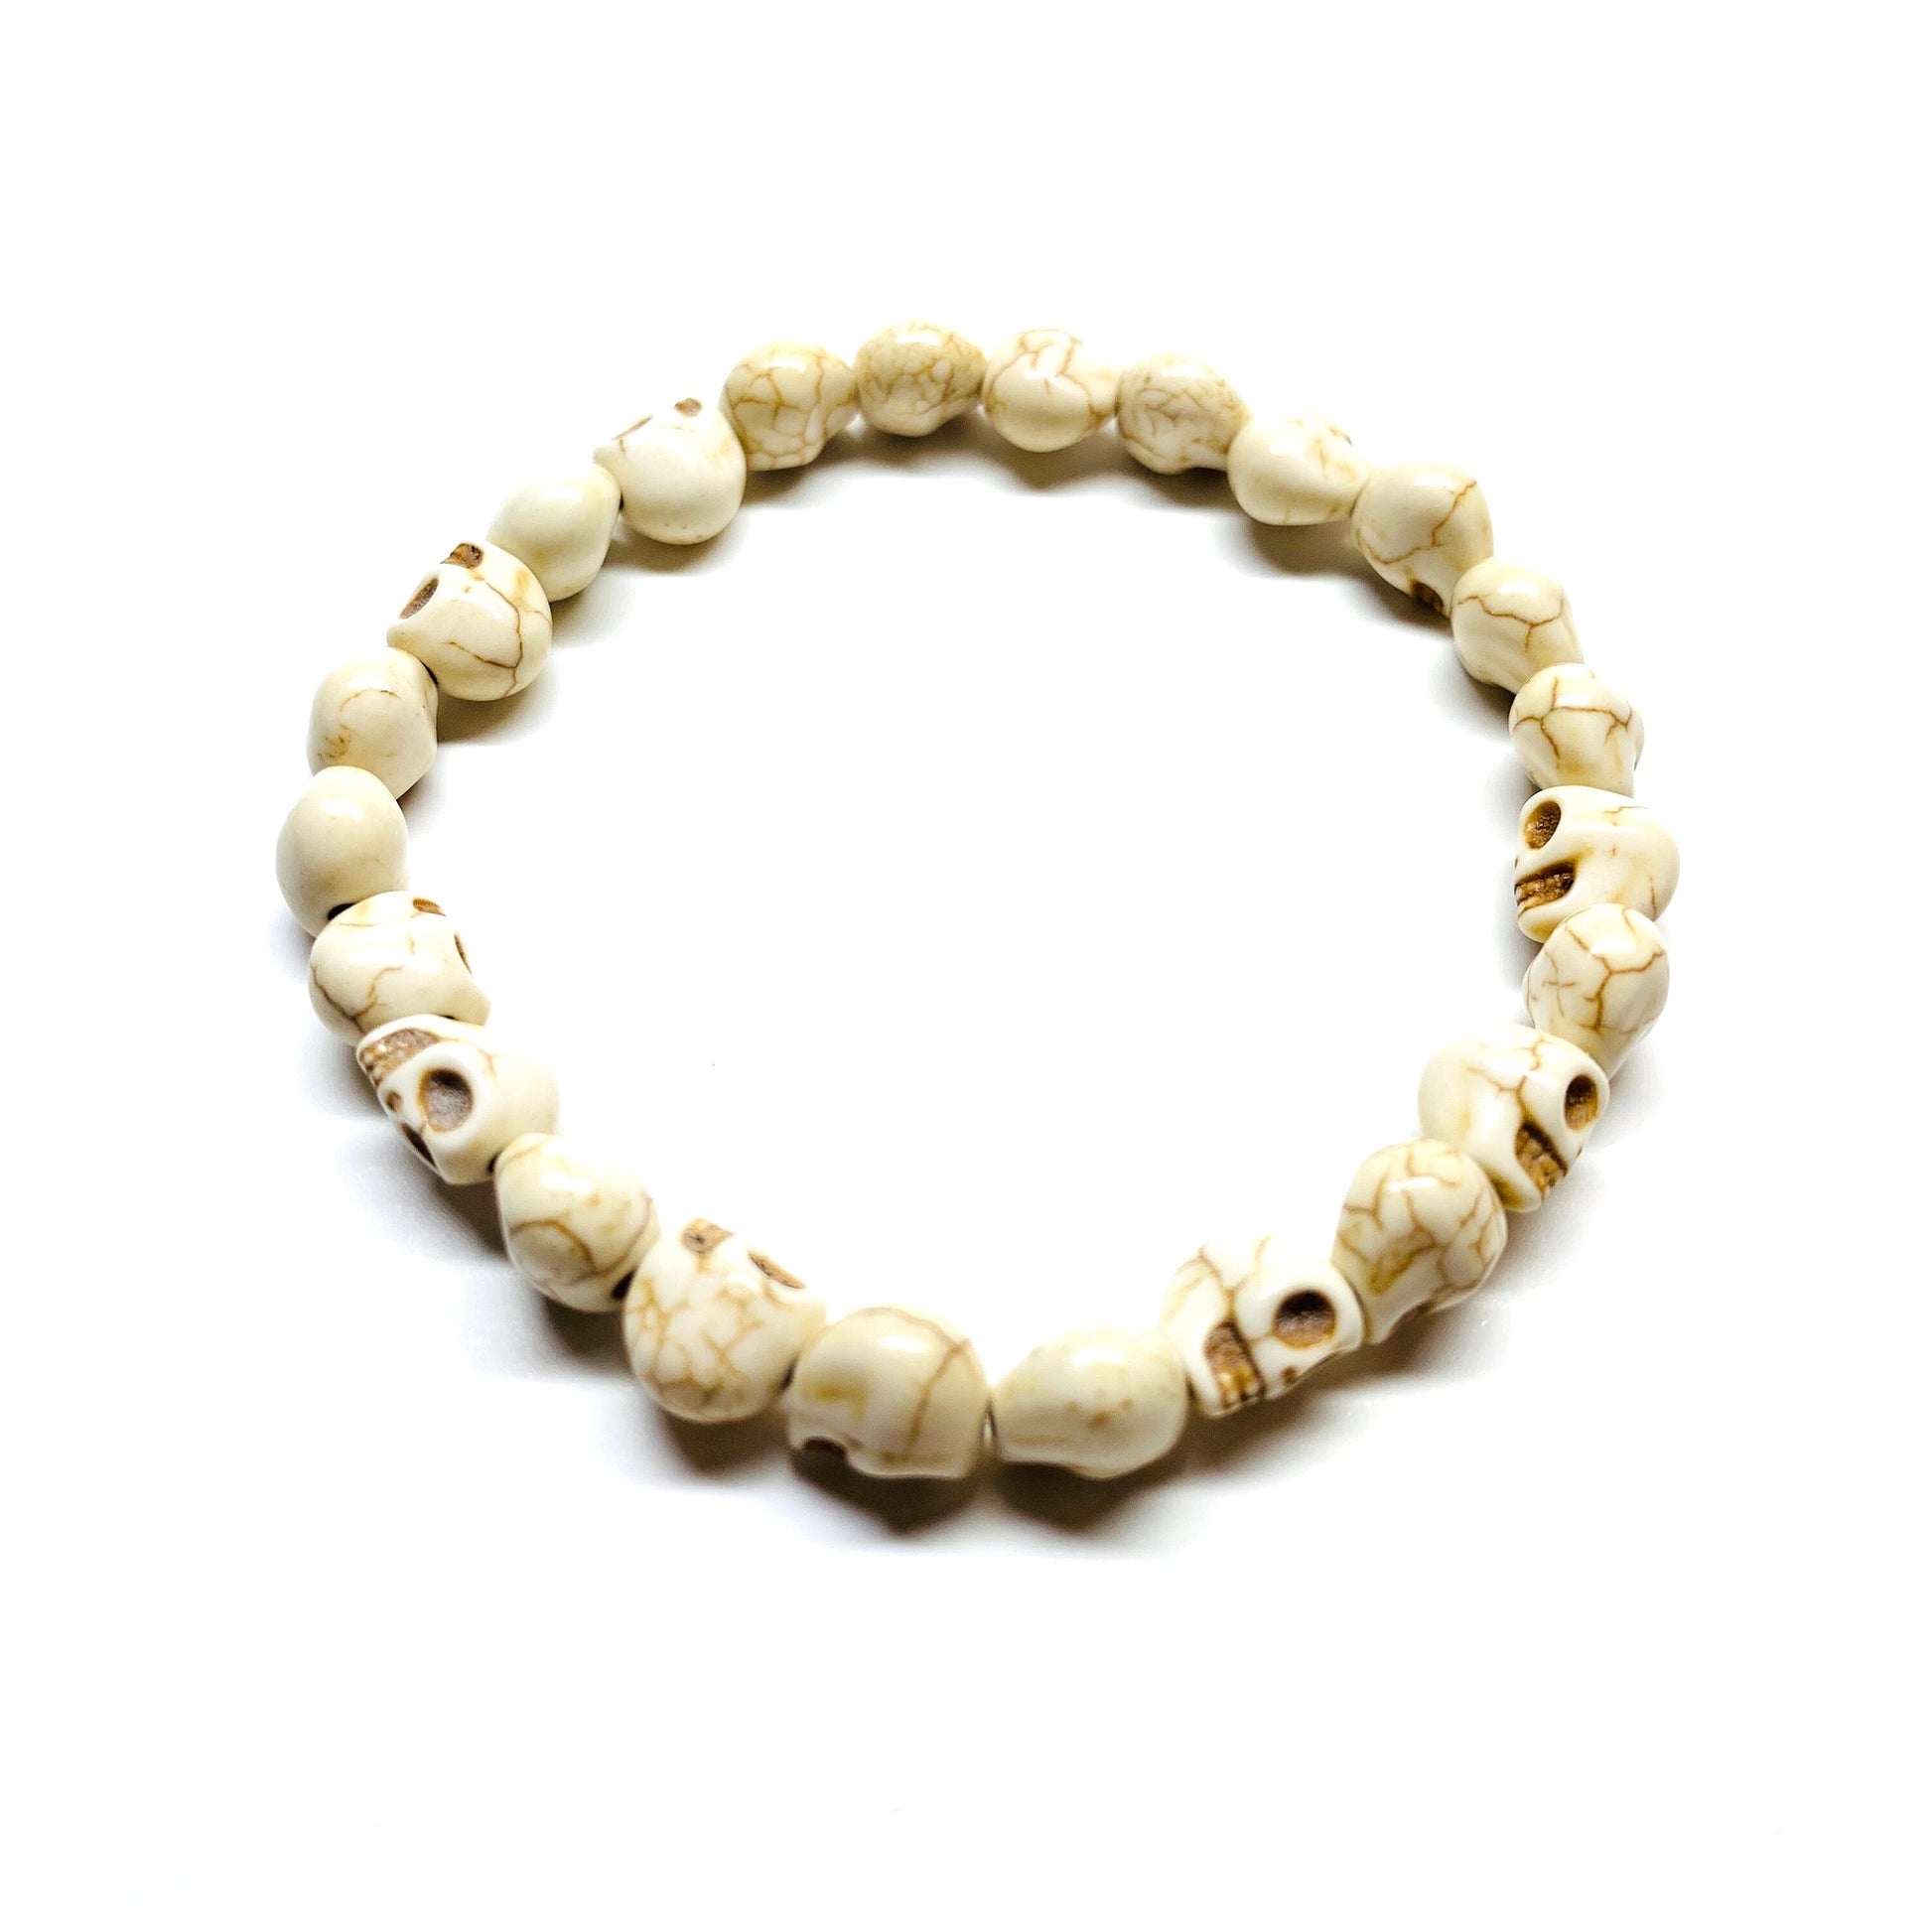 Skull Bracelet Skull Beads Wristband Men Skull Jewelry Unisex Skeleton Calaveras Pulsera Men's Jewelry Beige Casual Fashion Day of the Dead